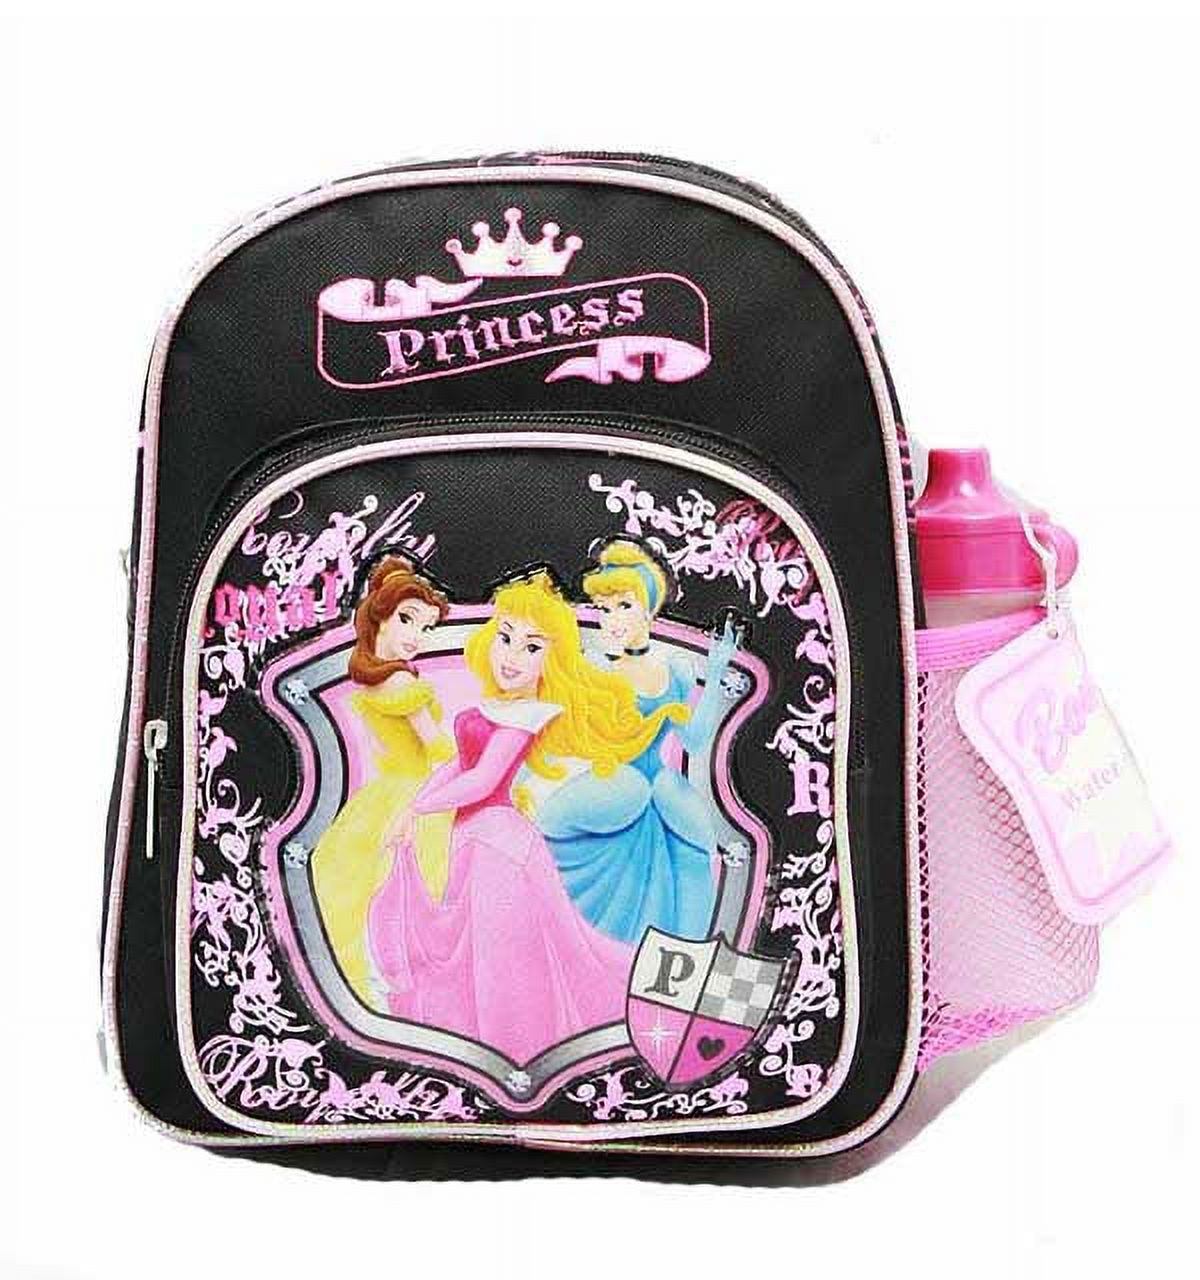 Mini Backpack - - Princess - w/Water Bottle Black New School Bag 35395 - image 1 of 3